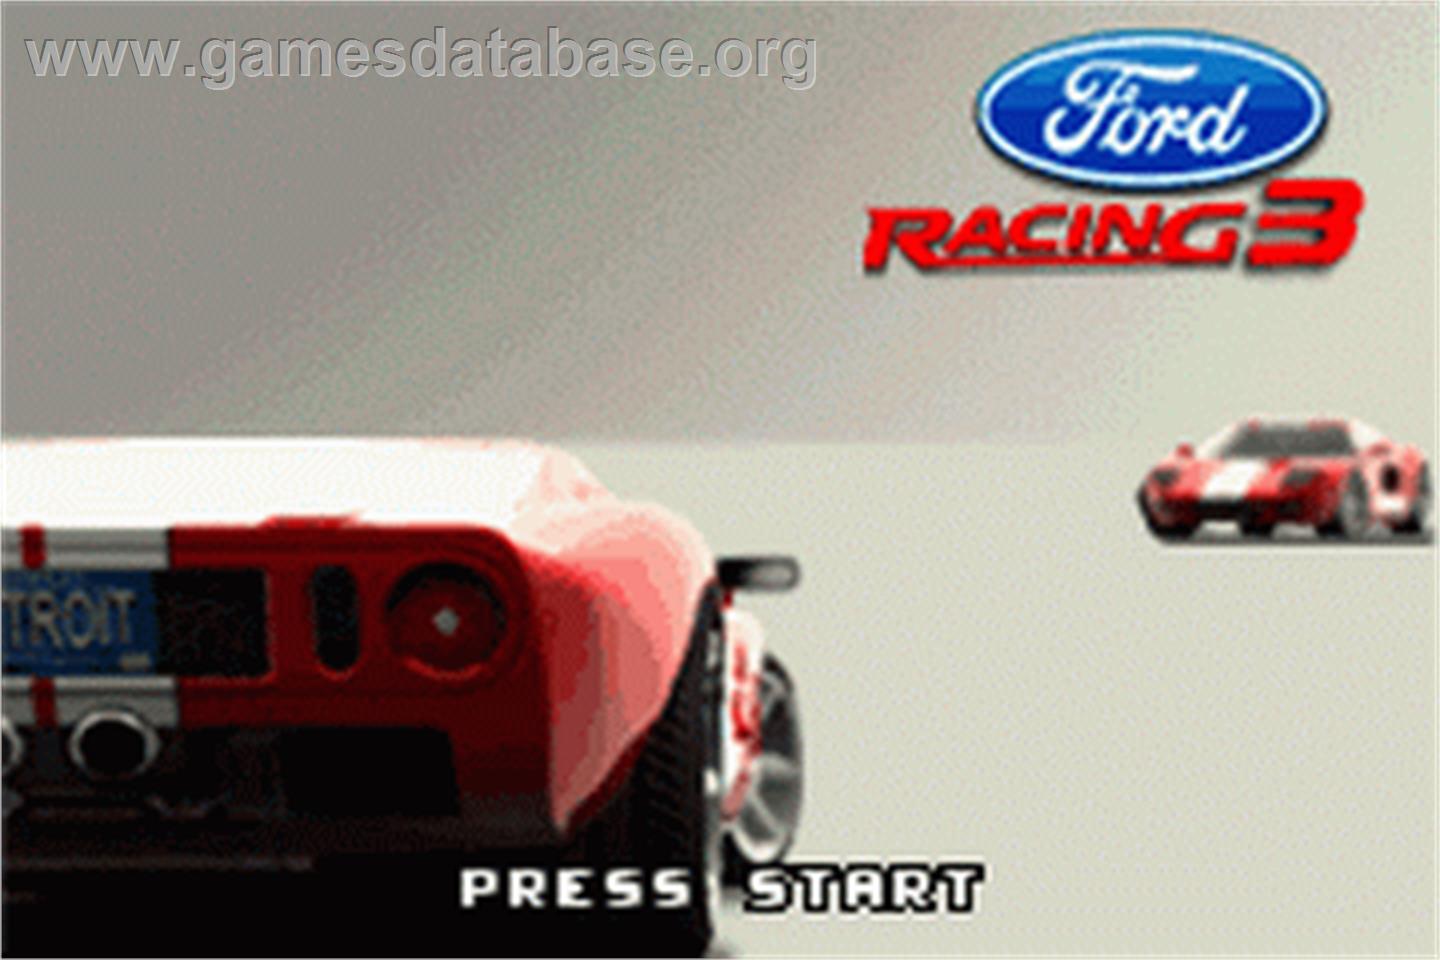 Ford Racing 3 - Nintendo Game Boy Advance - Artwork - Title Screen